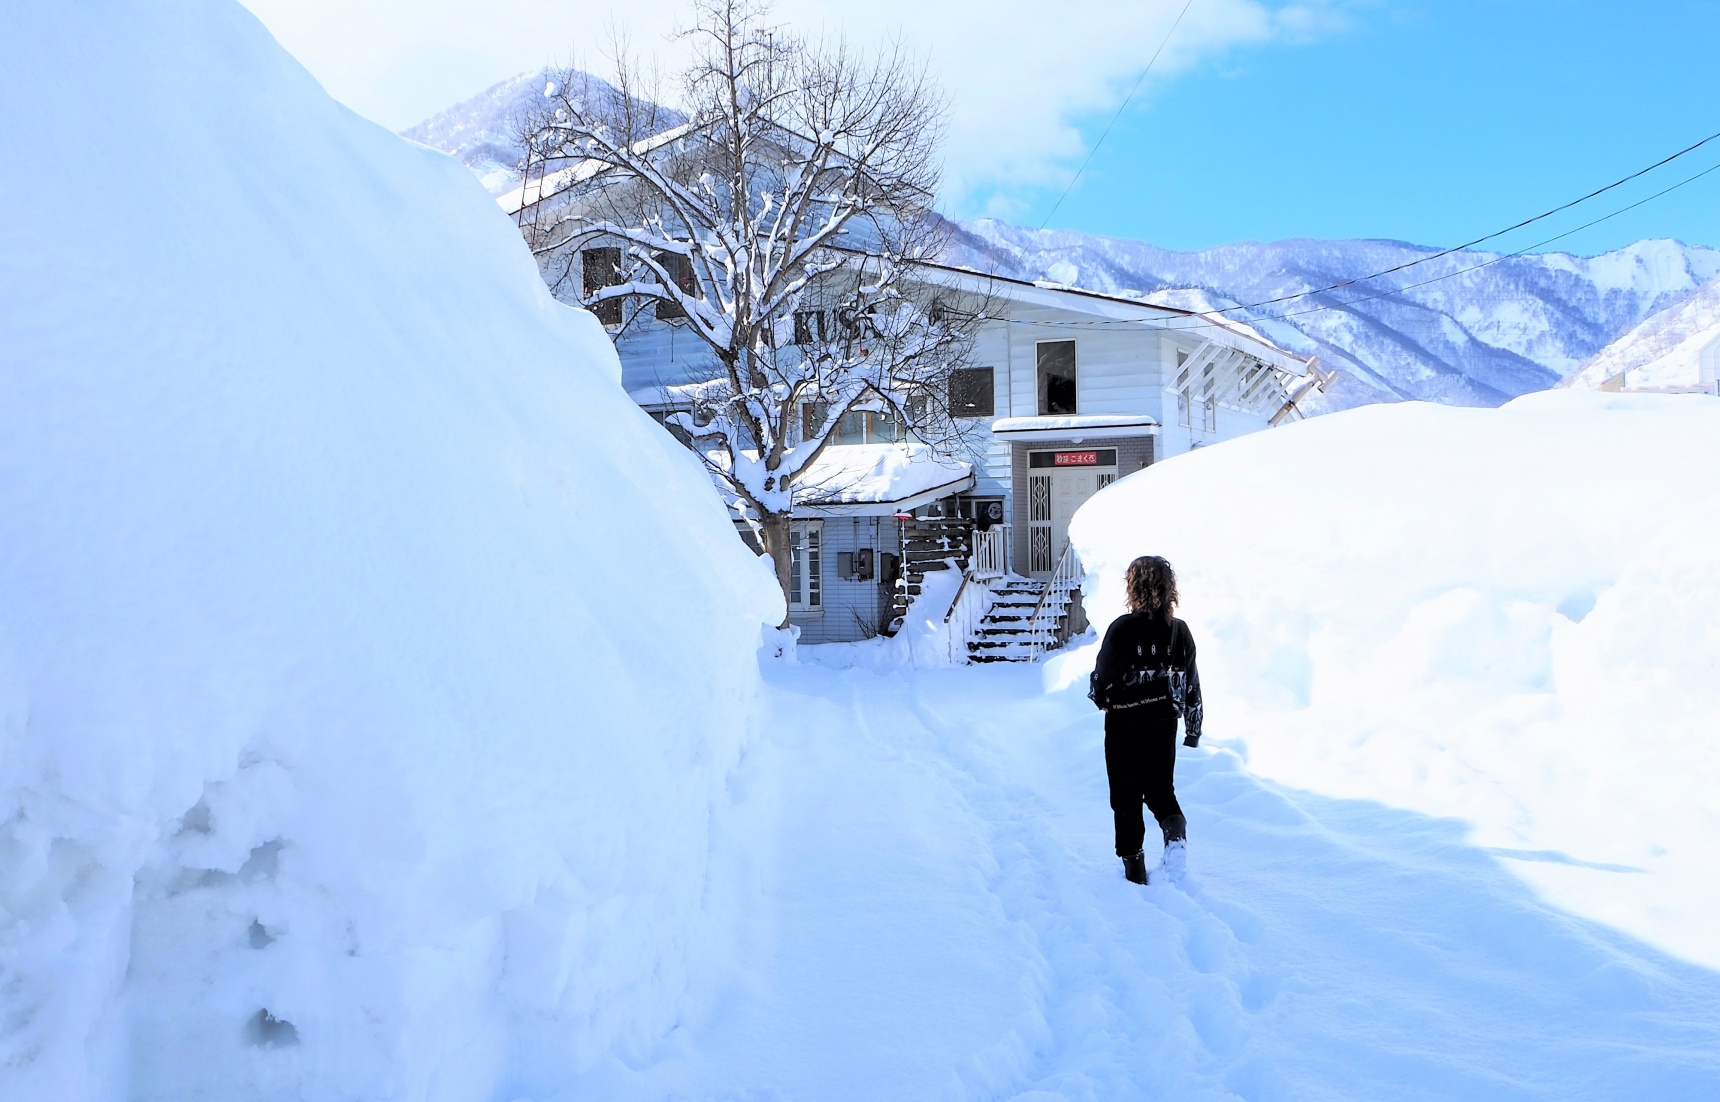 Deep in Snow Country - Yuzawa and Minakami